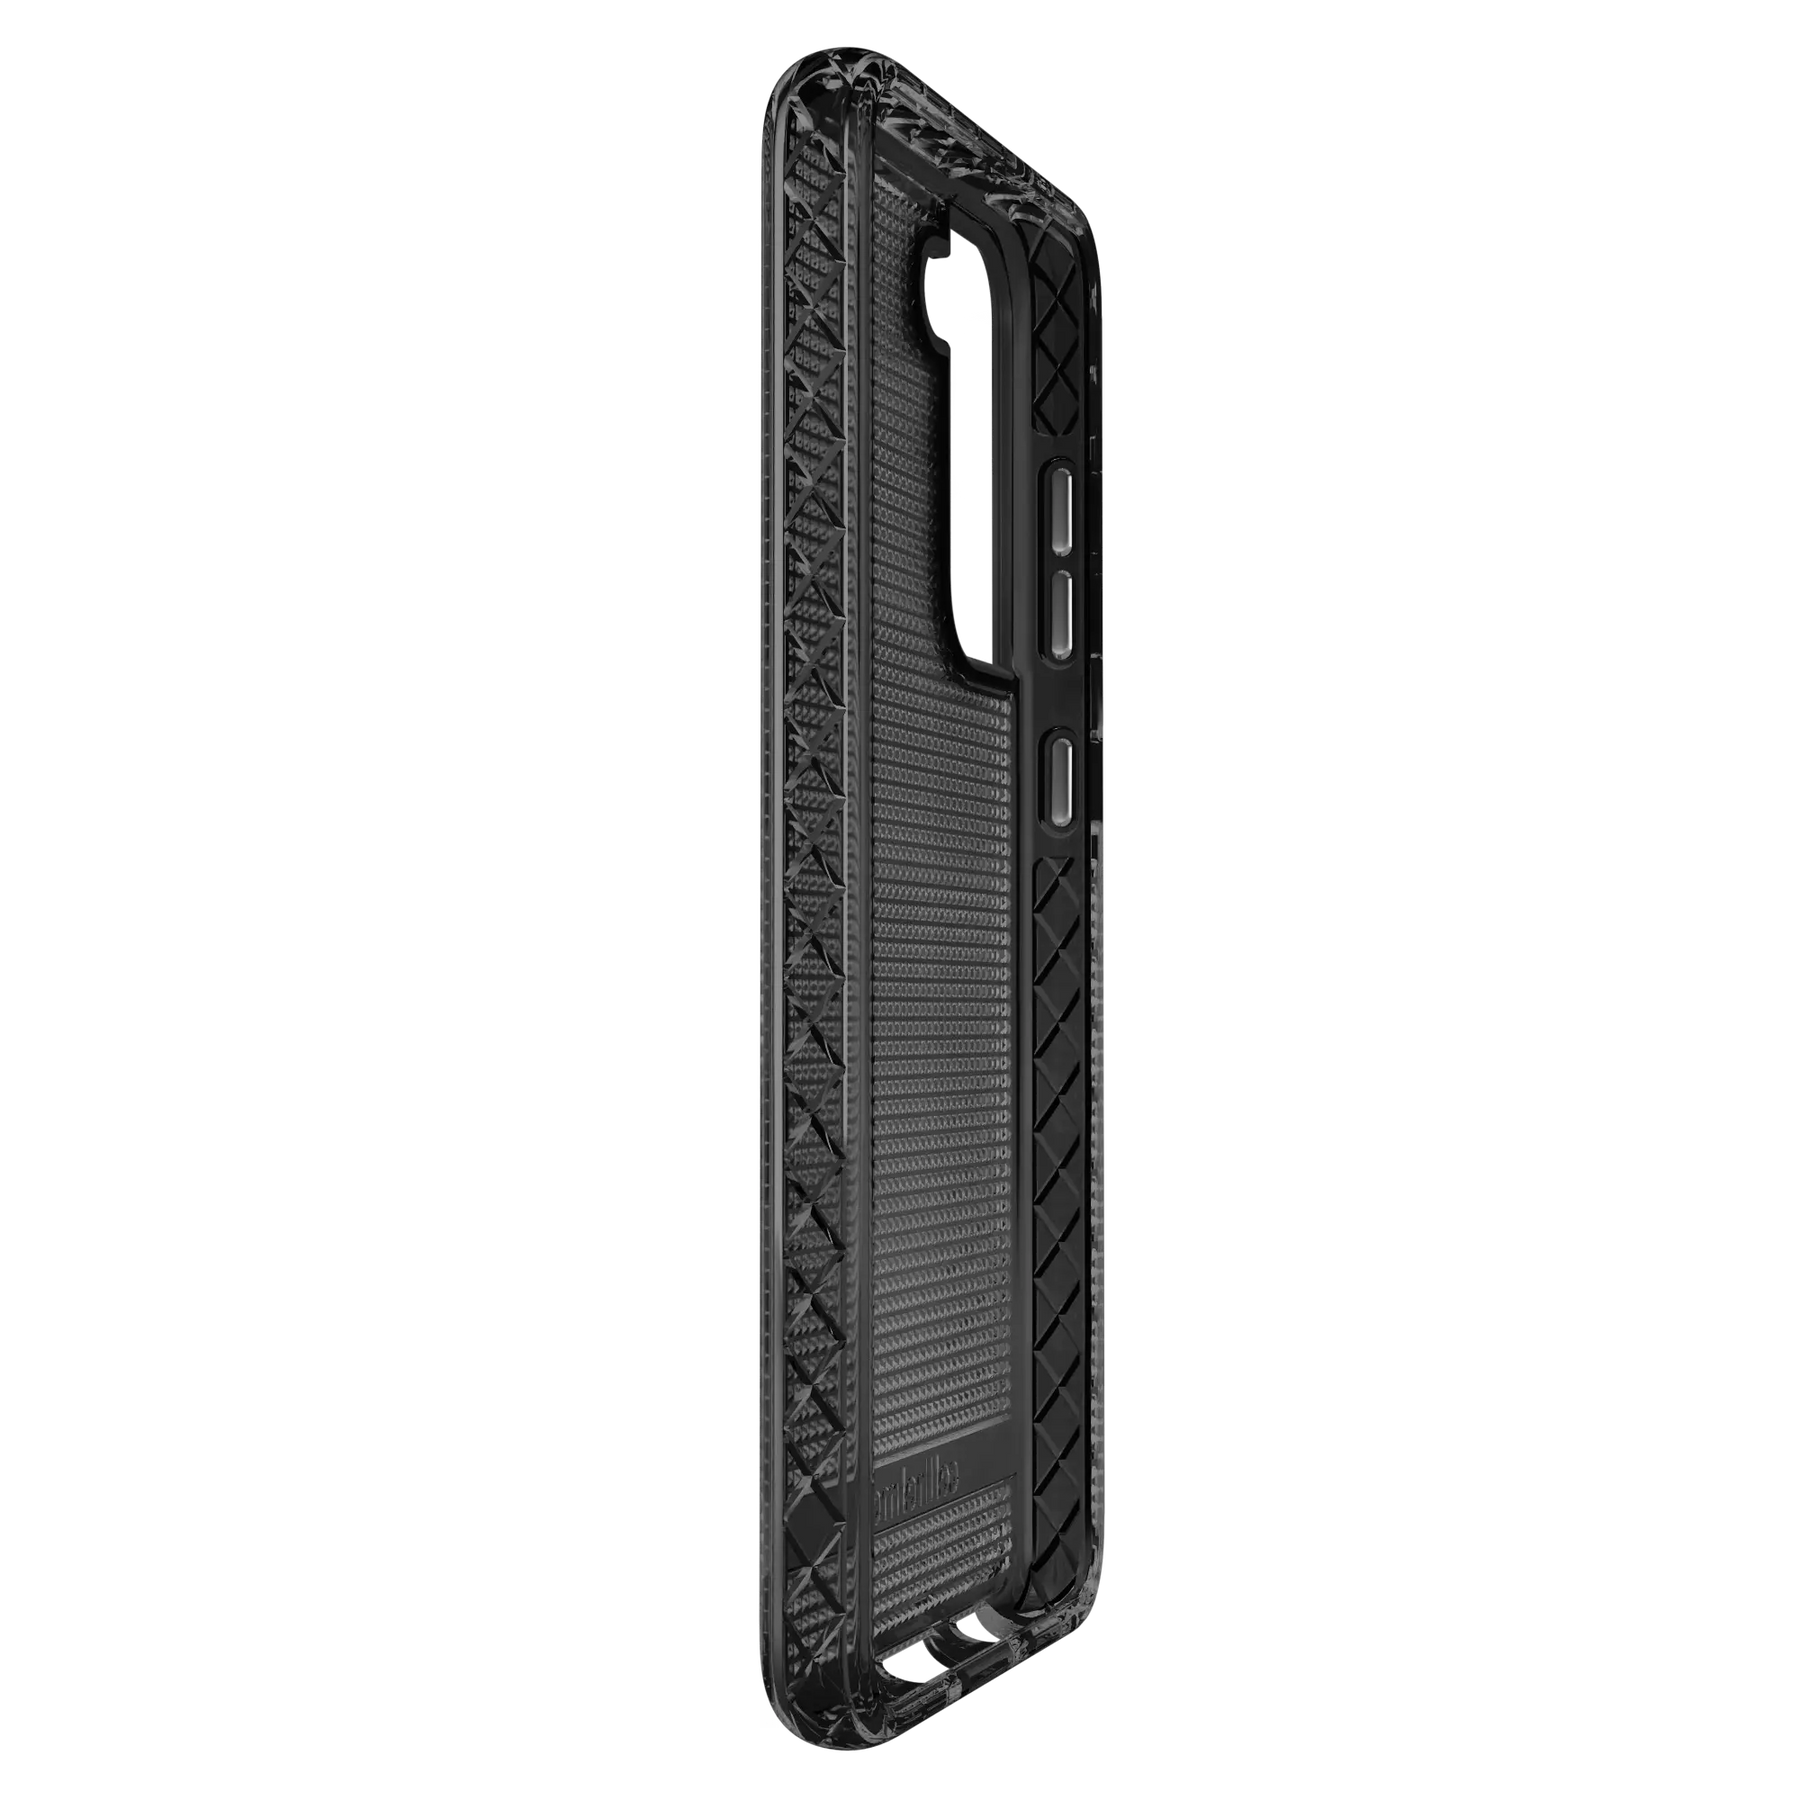 Altitude X Series for Samsung Galaxy S21 FE  - Black - Case -  - cellhelmet